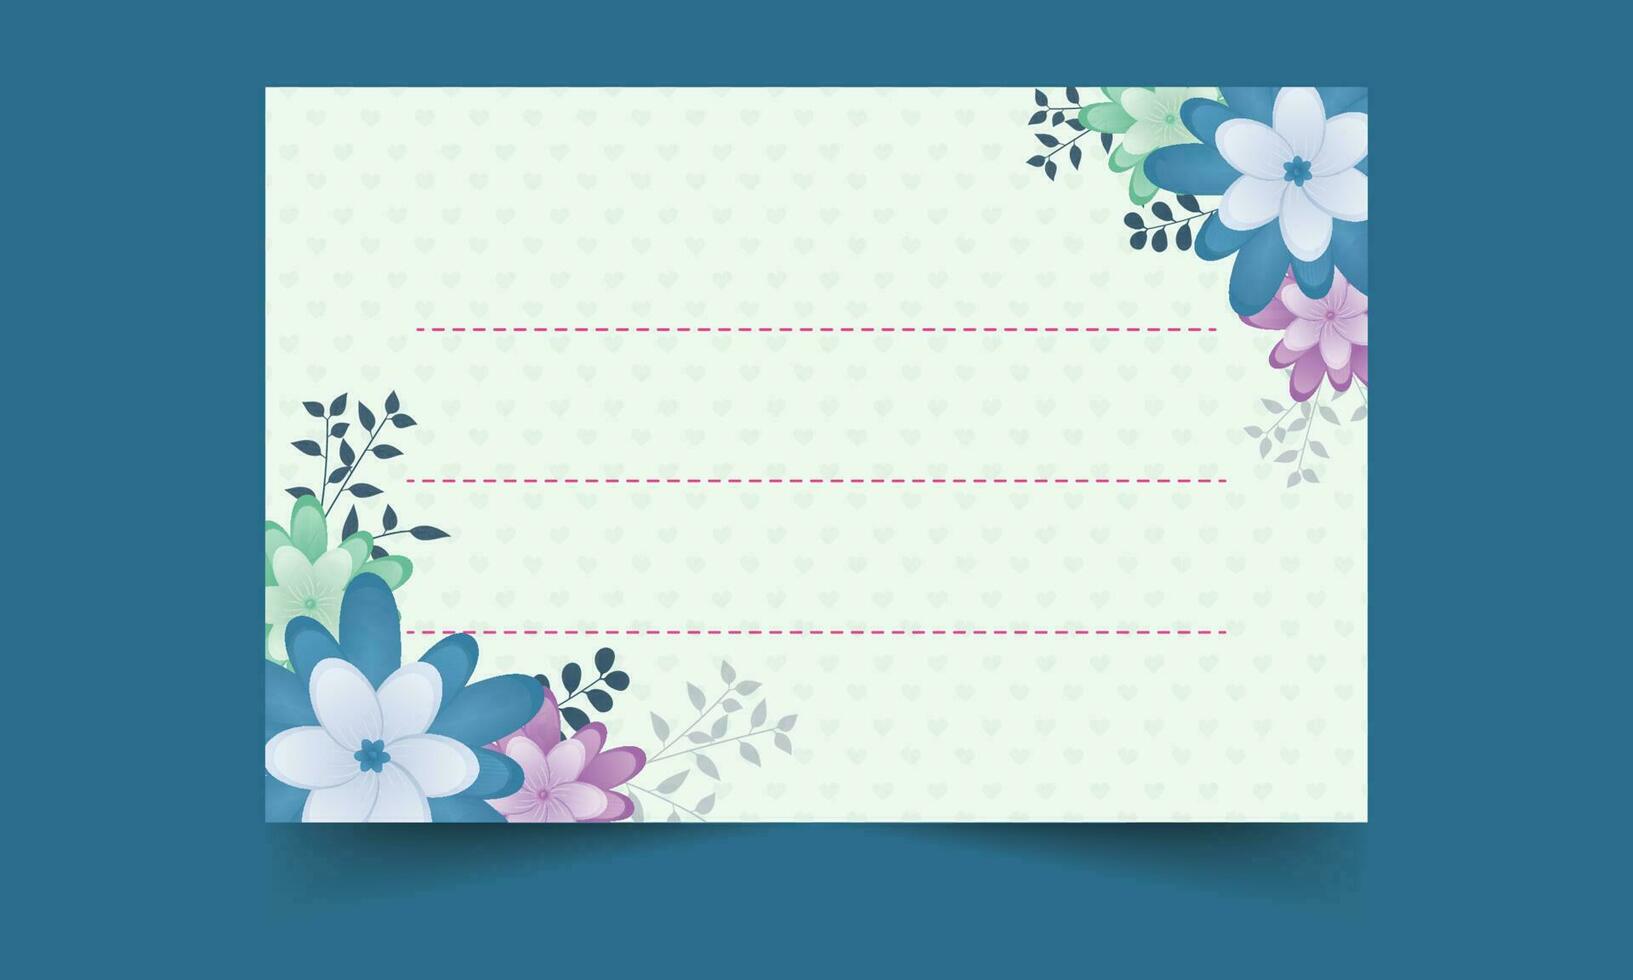 hermosa flor con hojas decorativo tarjeta o cuaderno etiqueta en verde azulado azul antecedentes. vector